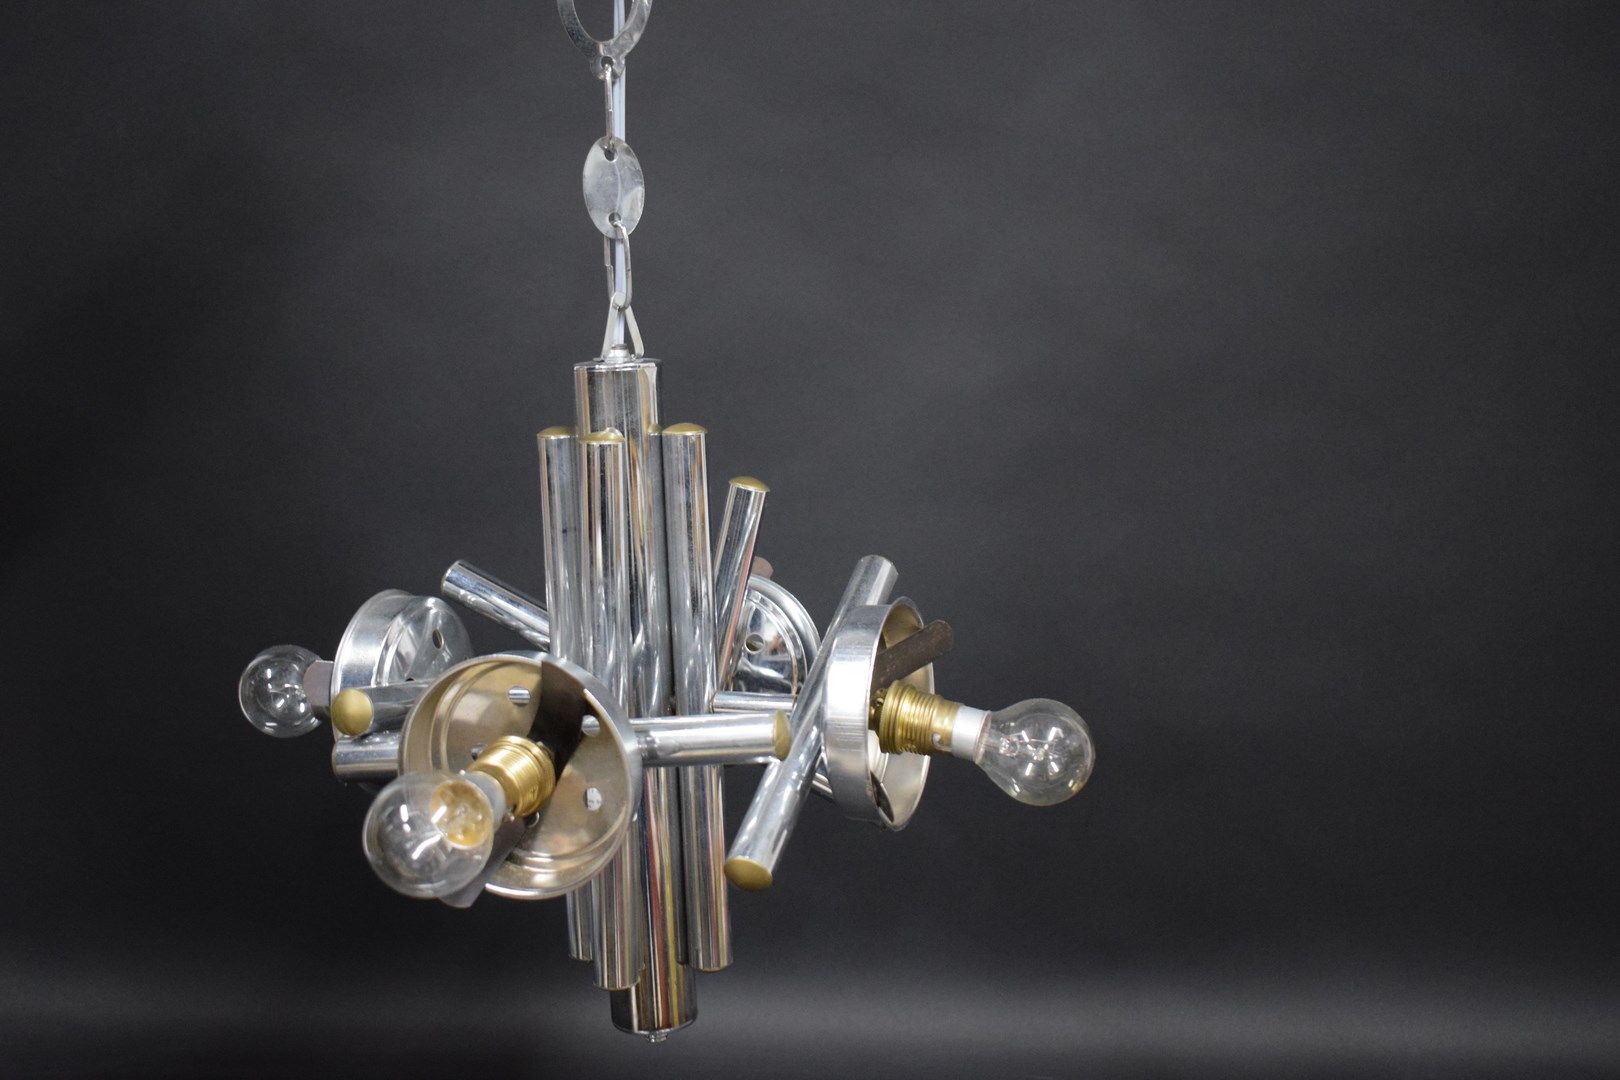 Null 盖塔诺-斯科拉里 (1927-1994)

镀铬金属和黄色玻璃球的Mazzega照明灯具。

高度：80厘米